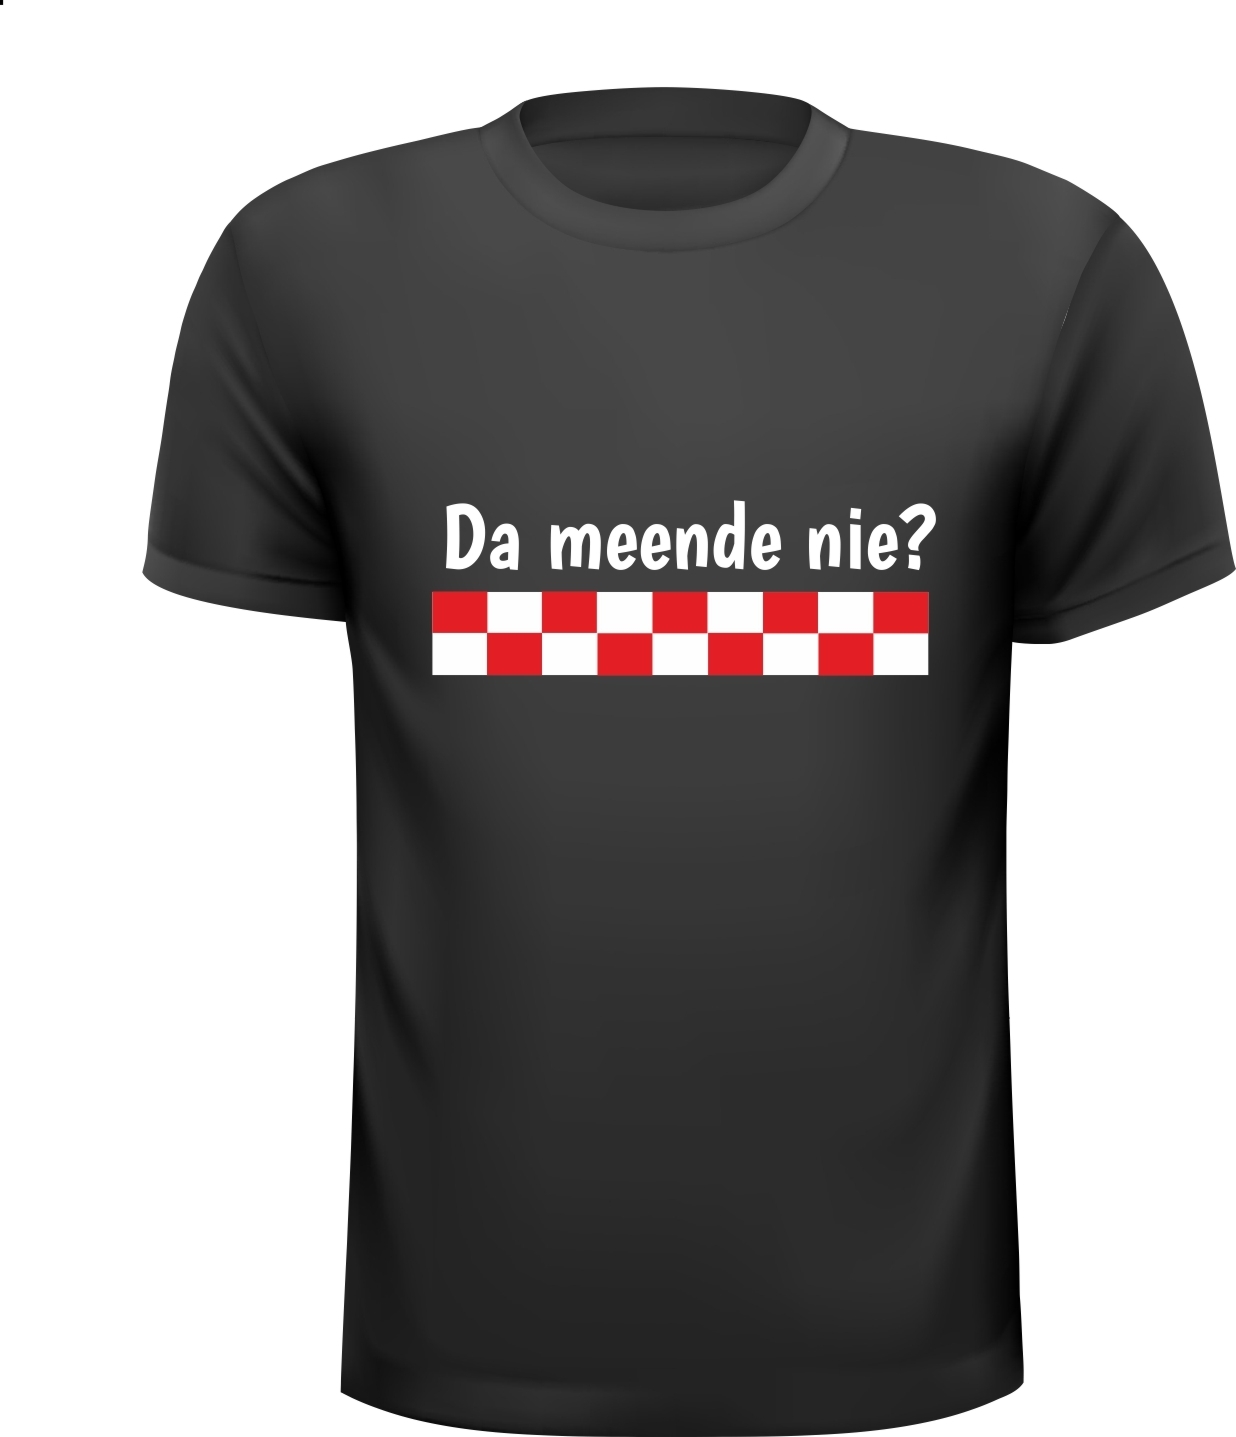 da meende nie? T-shirt Brabant dialect